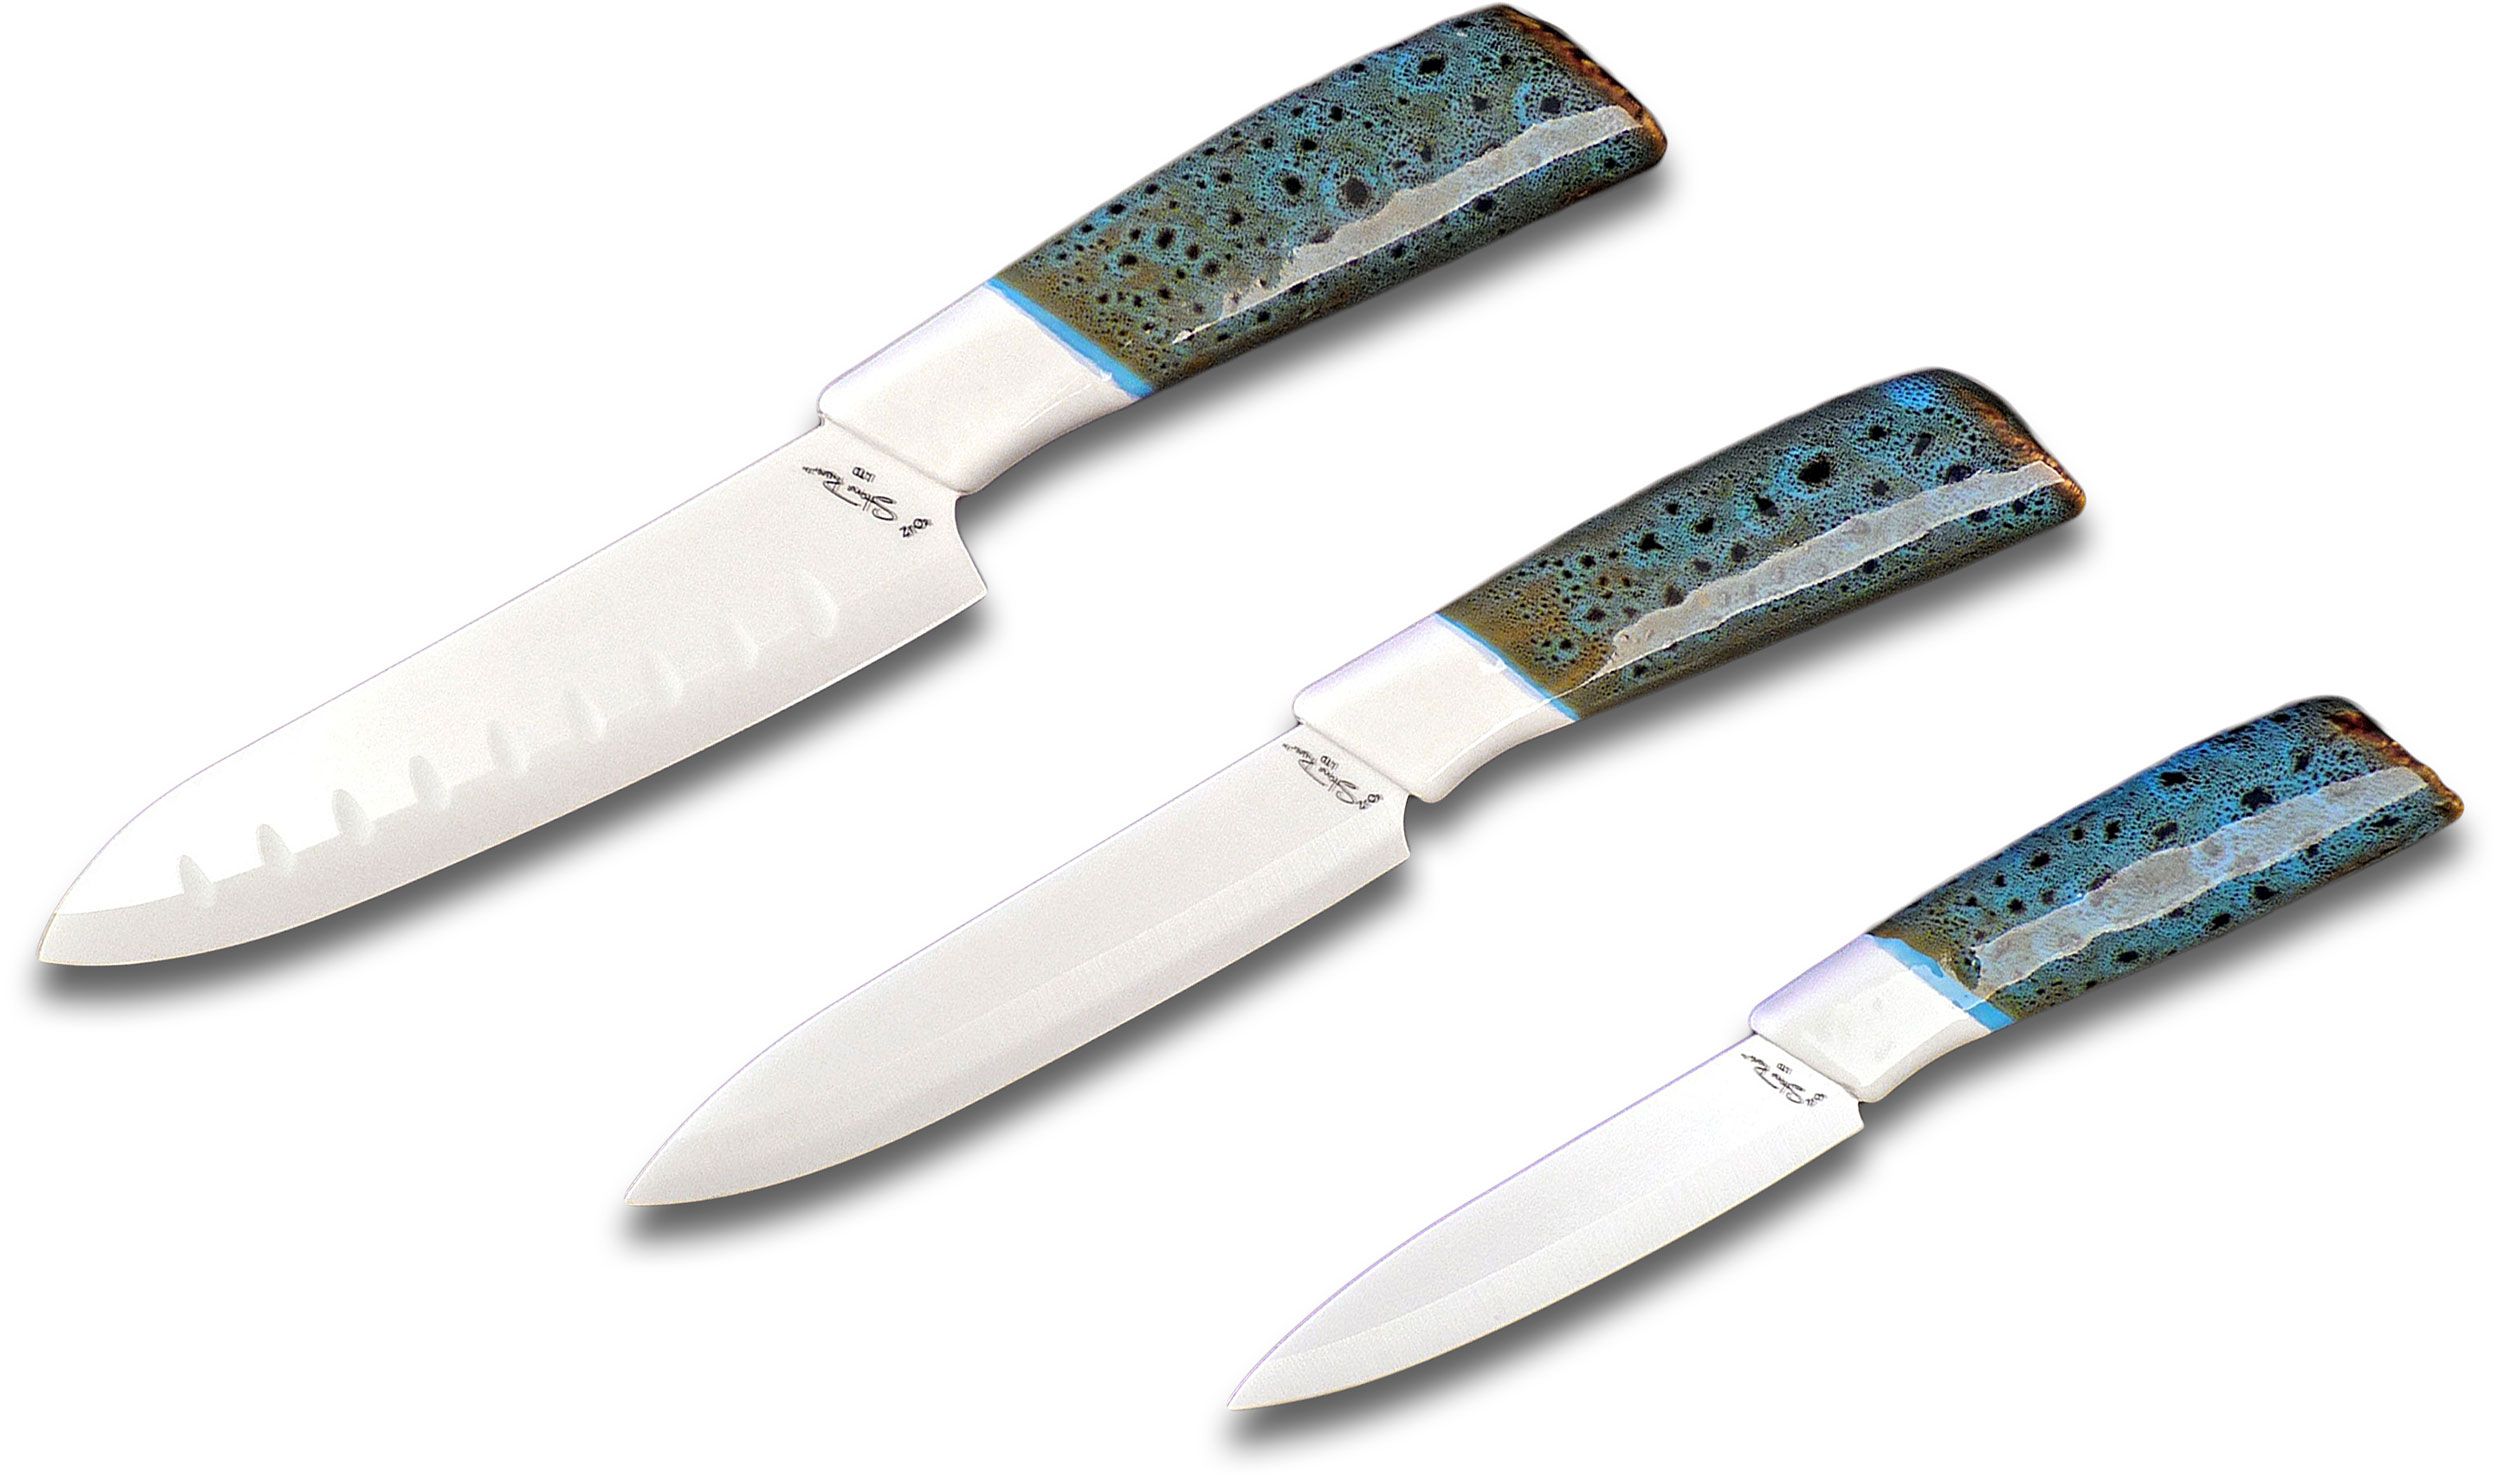 Stone River Gear Three Piece White Ceramic Paring/Utility/Santoku Knife  Set, Ceramic Handles, Acrylic Holder - KnifeCenter - SRG33CKWH -  Discontinued